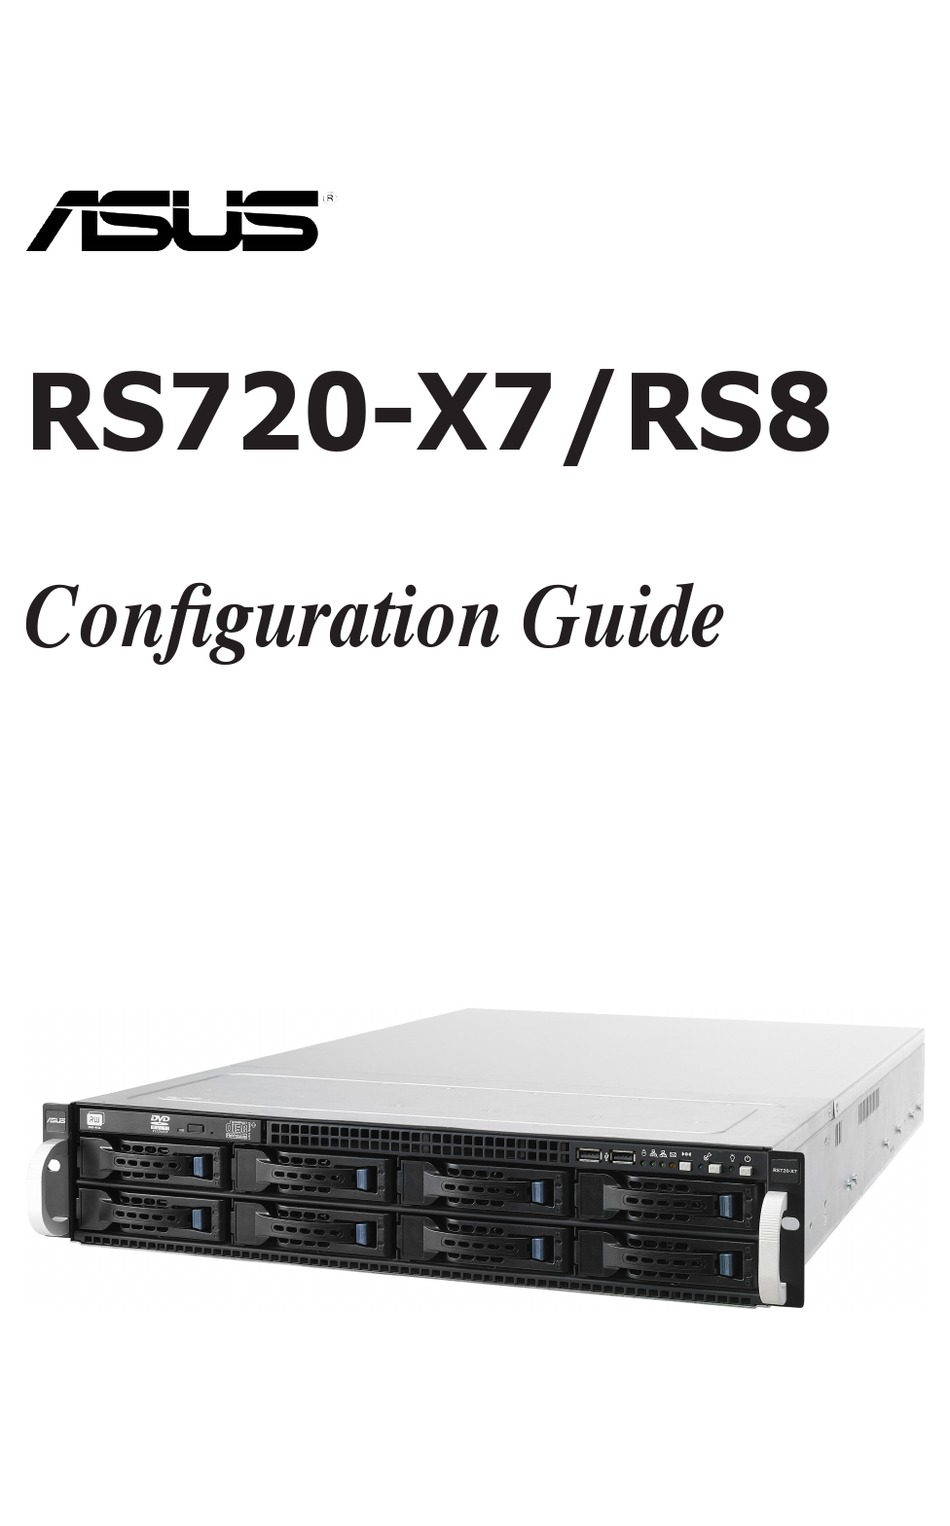 ASUS RS720-X7 CONFIGURATION MANUAL Pdf Download | ManualsLib